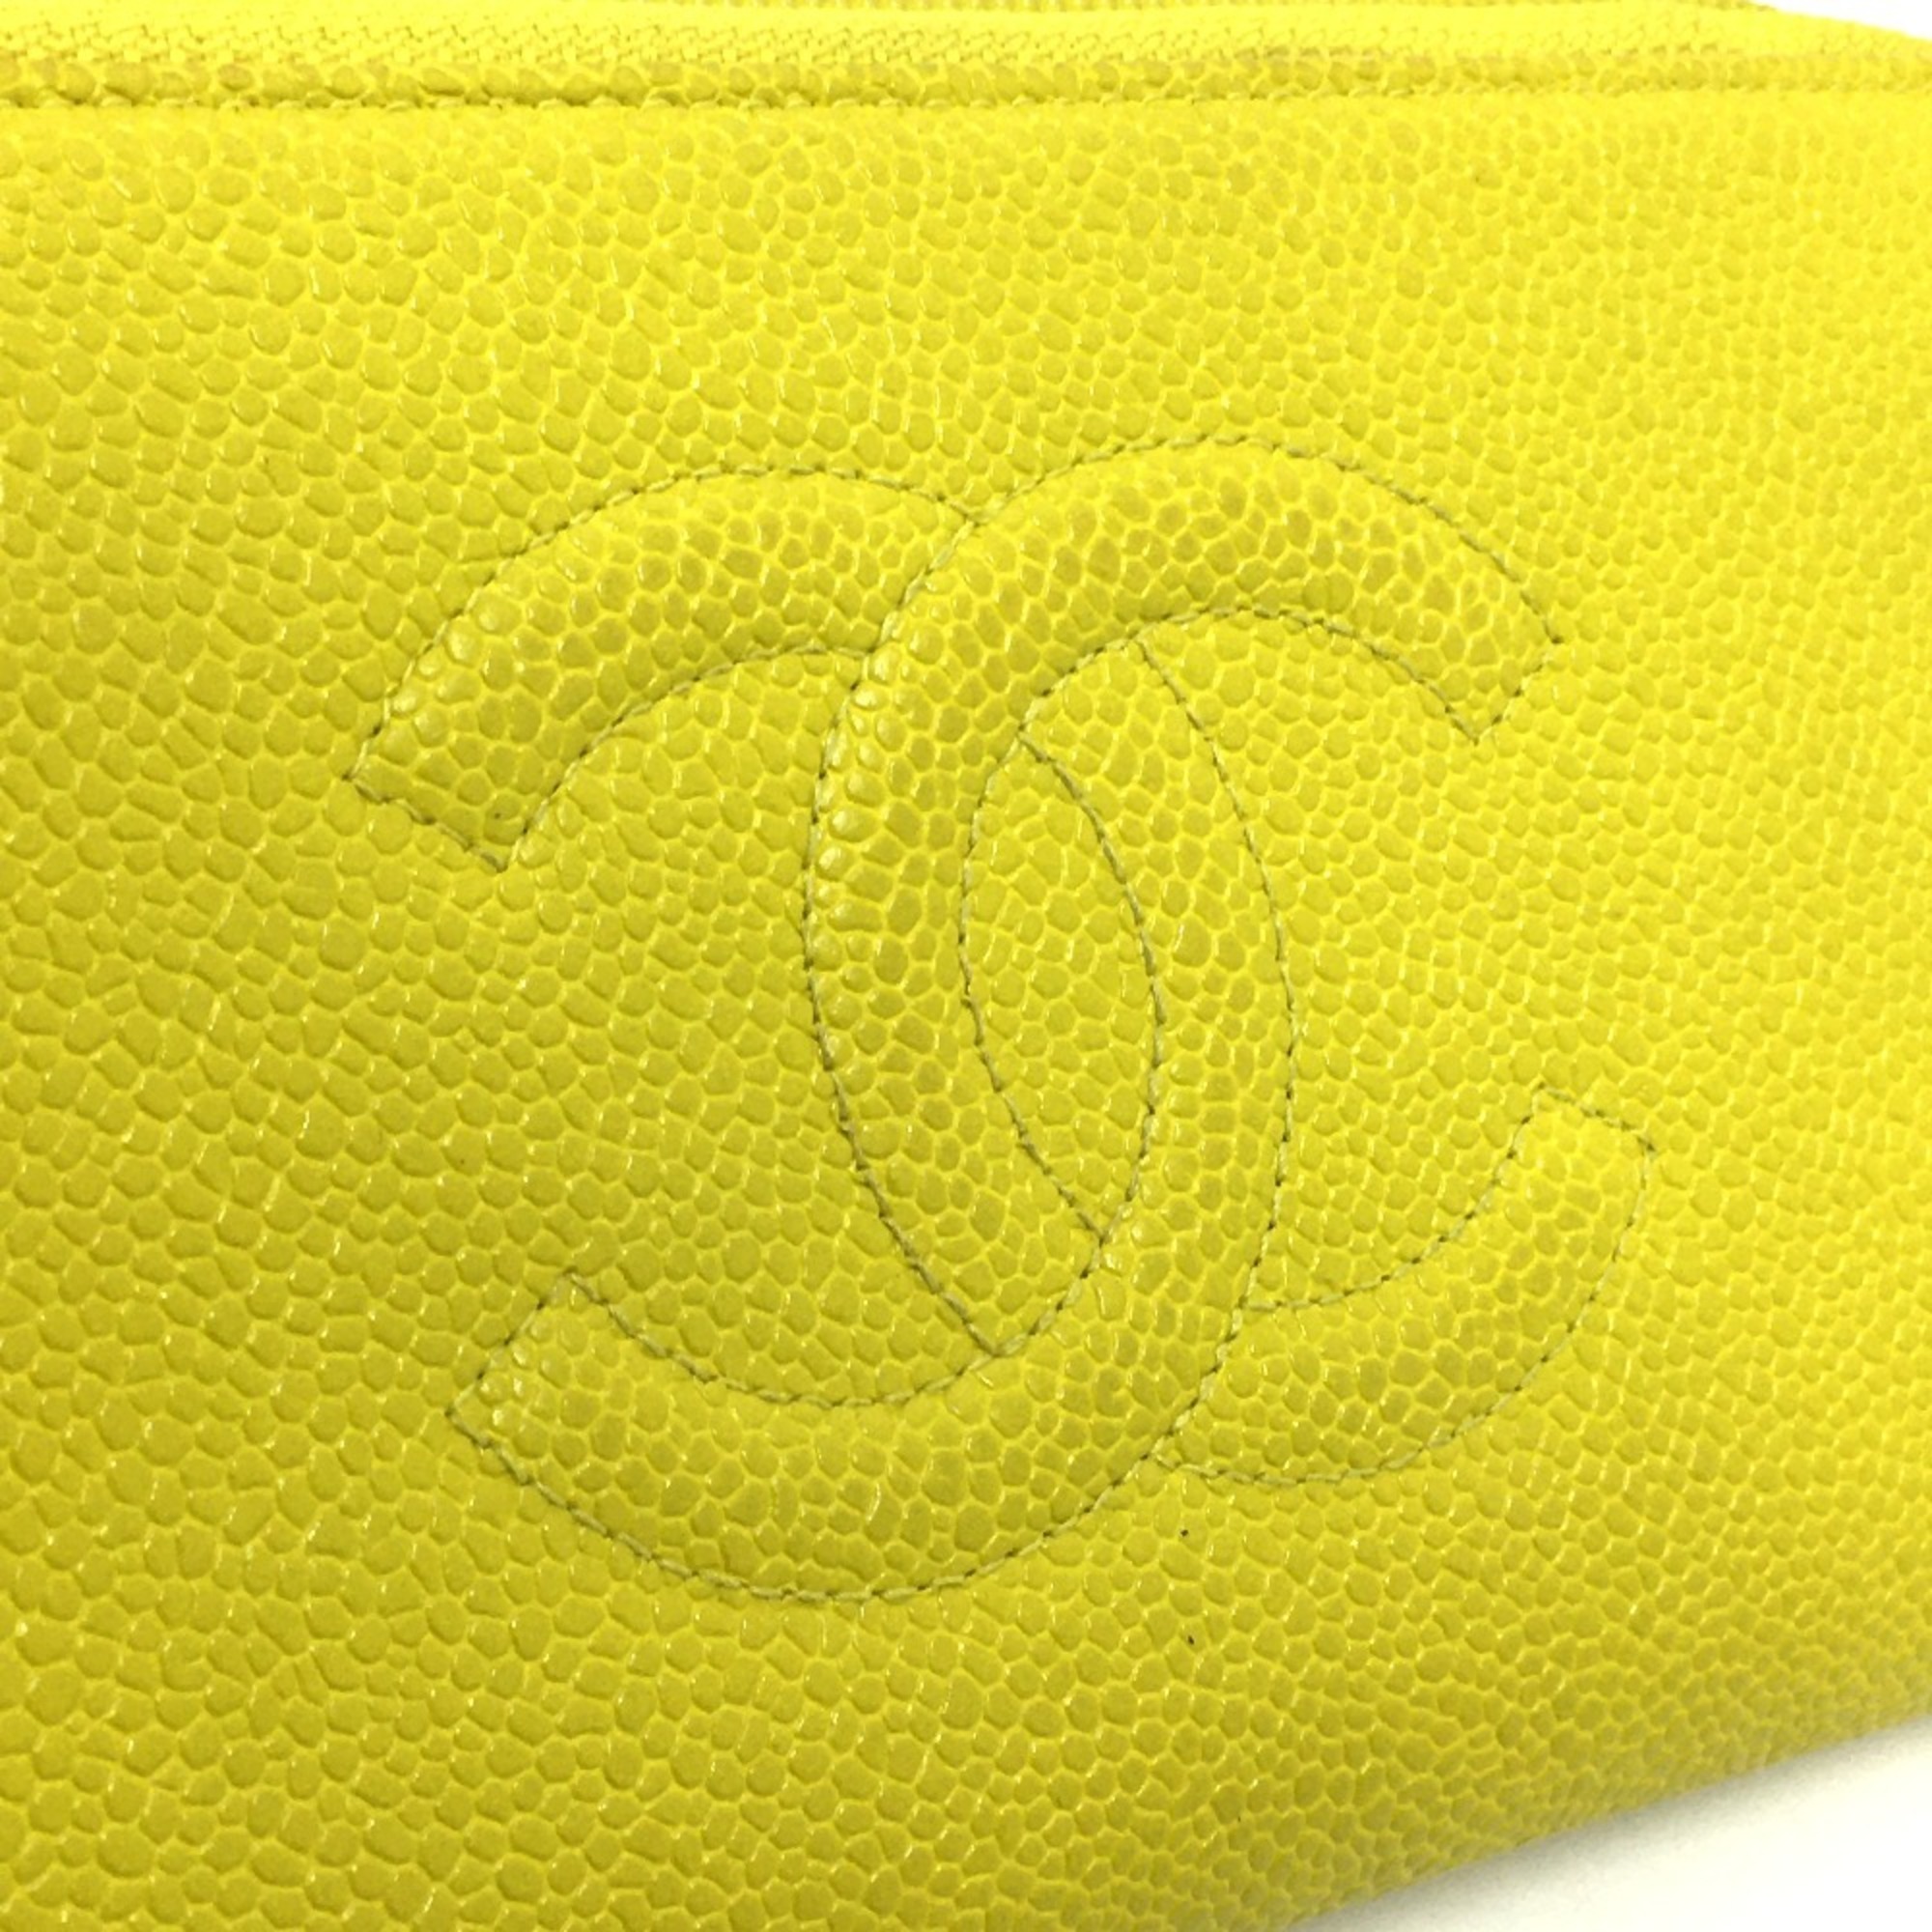 CHANEL CC Coco Mark Round Zipper Long Wallet (With Coin Purse) Caviar Skin Women's Yellow